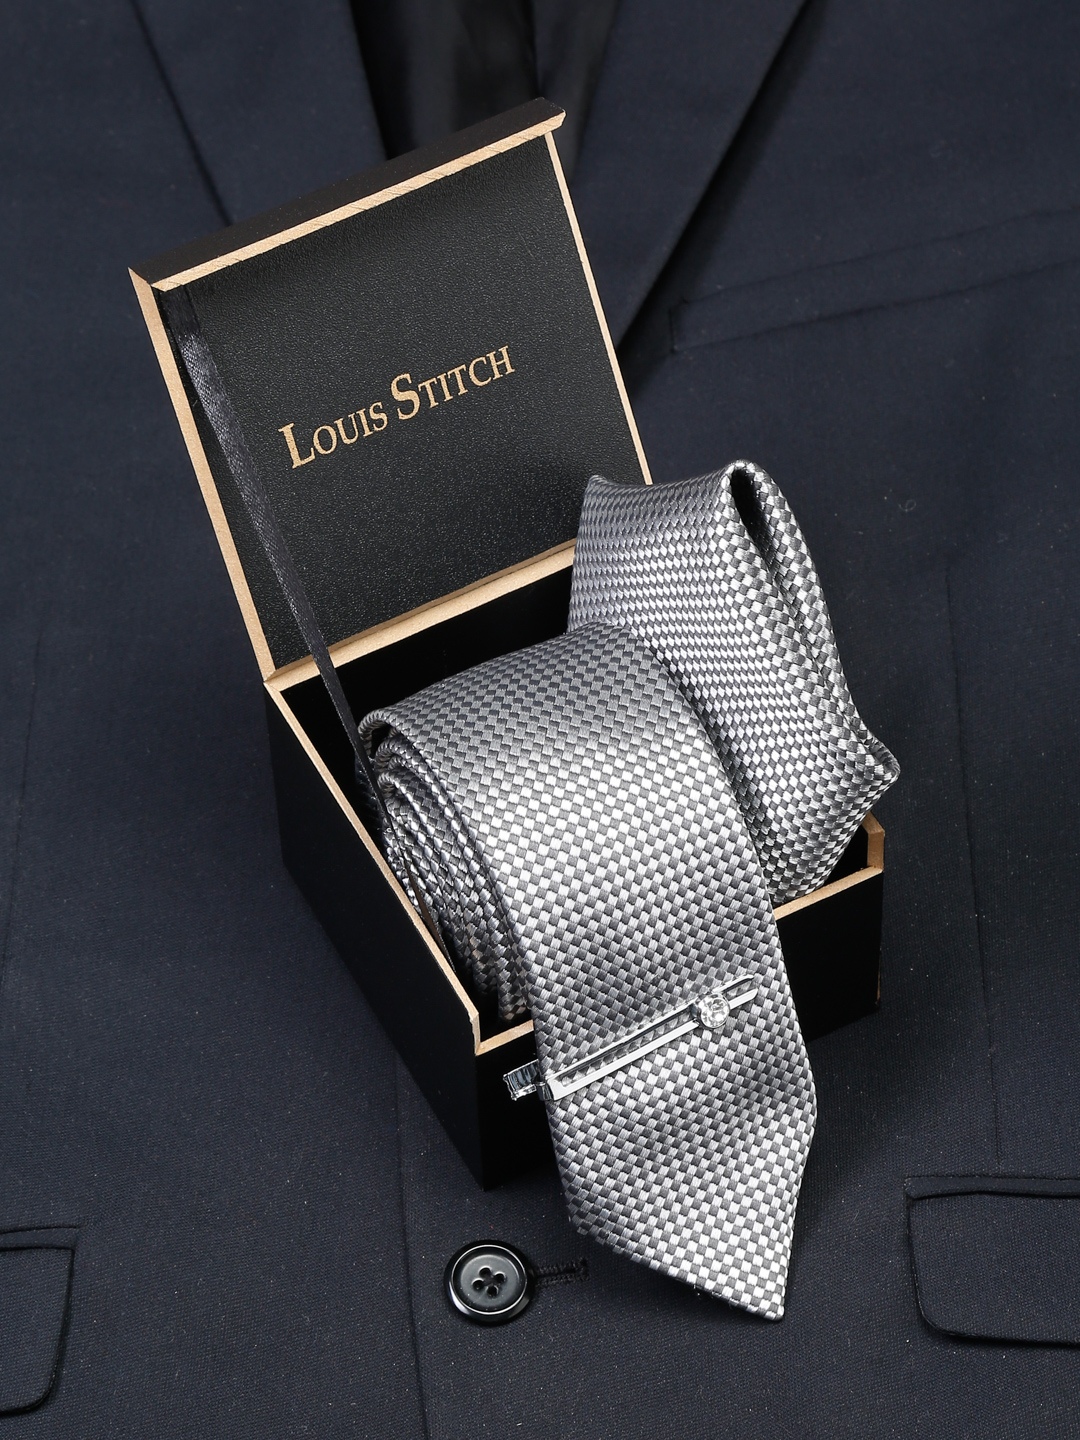 

LOUIS STITCH Men's Checkered Black Italian Silk Necktie Accessory Gift Set, Silver